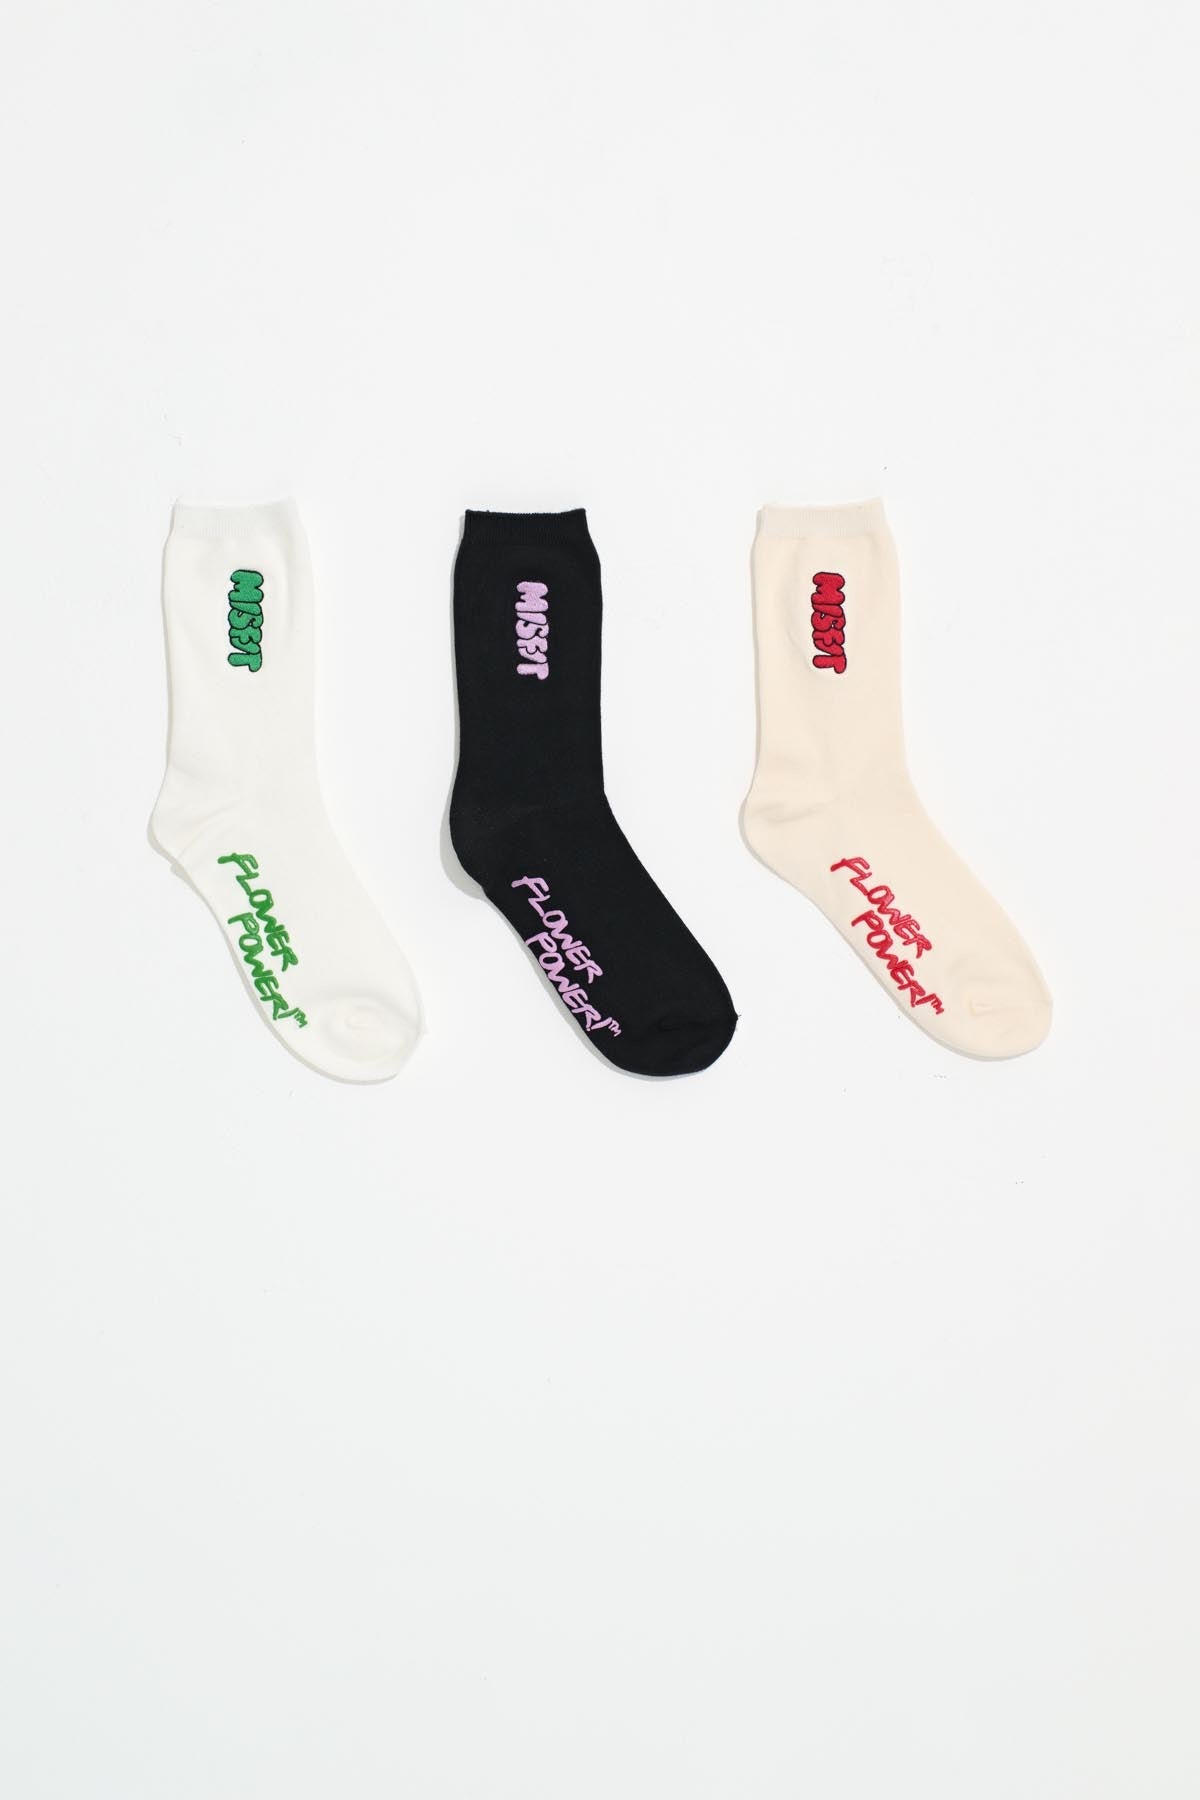 MISFIT - loving hope organic sock 3 pack - multi